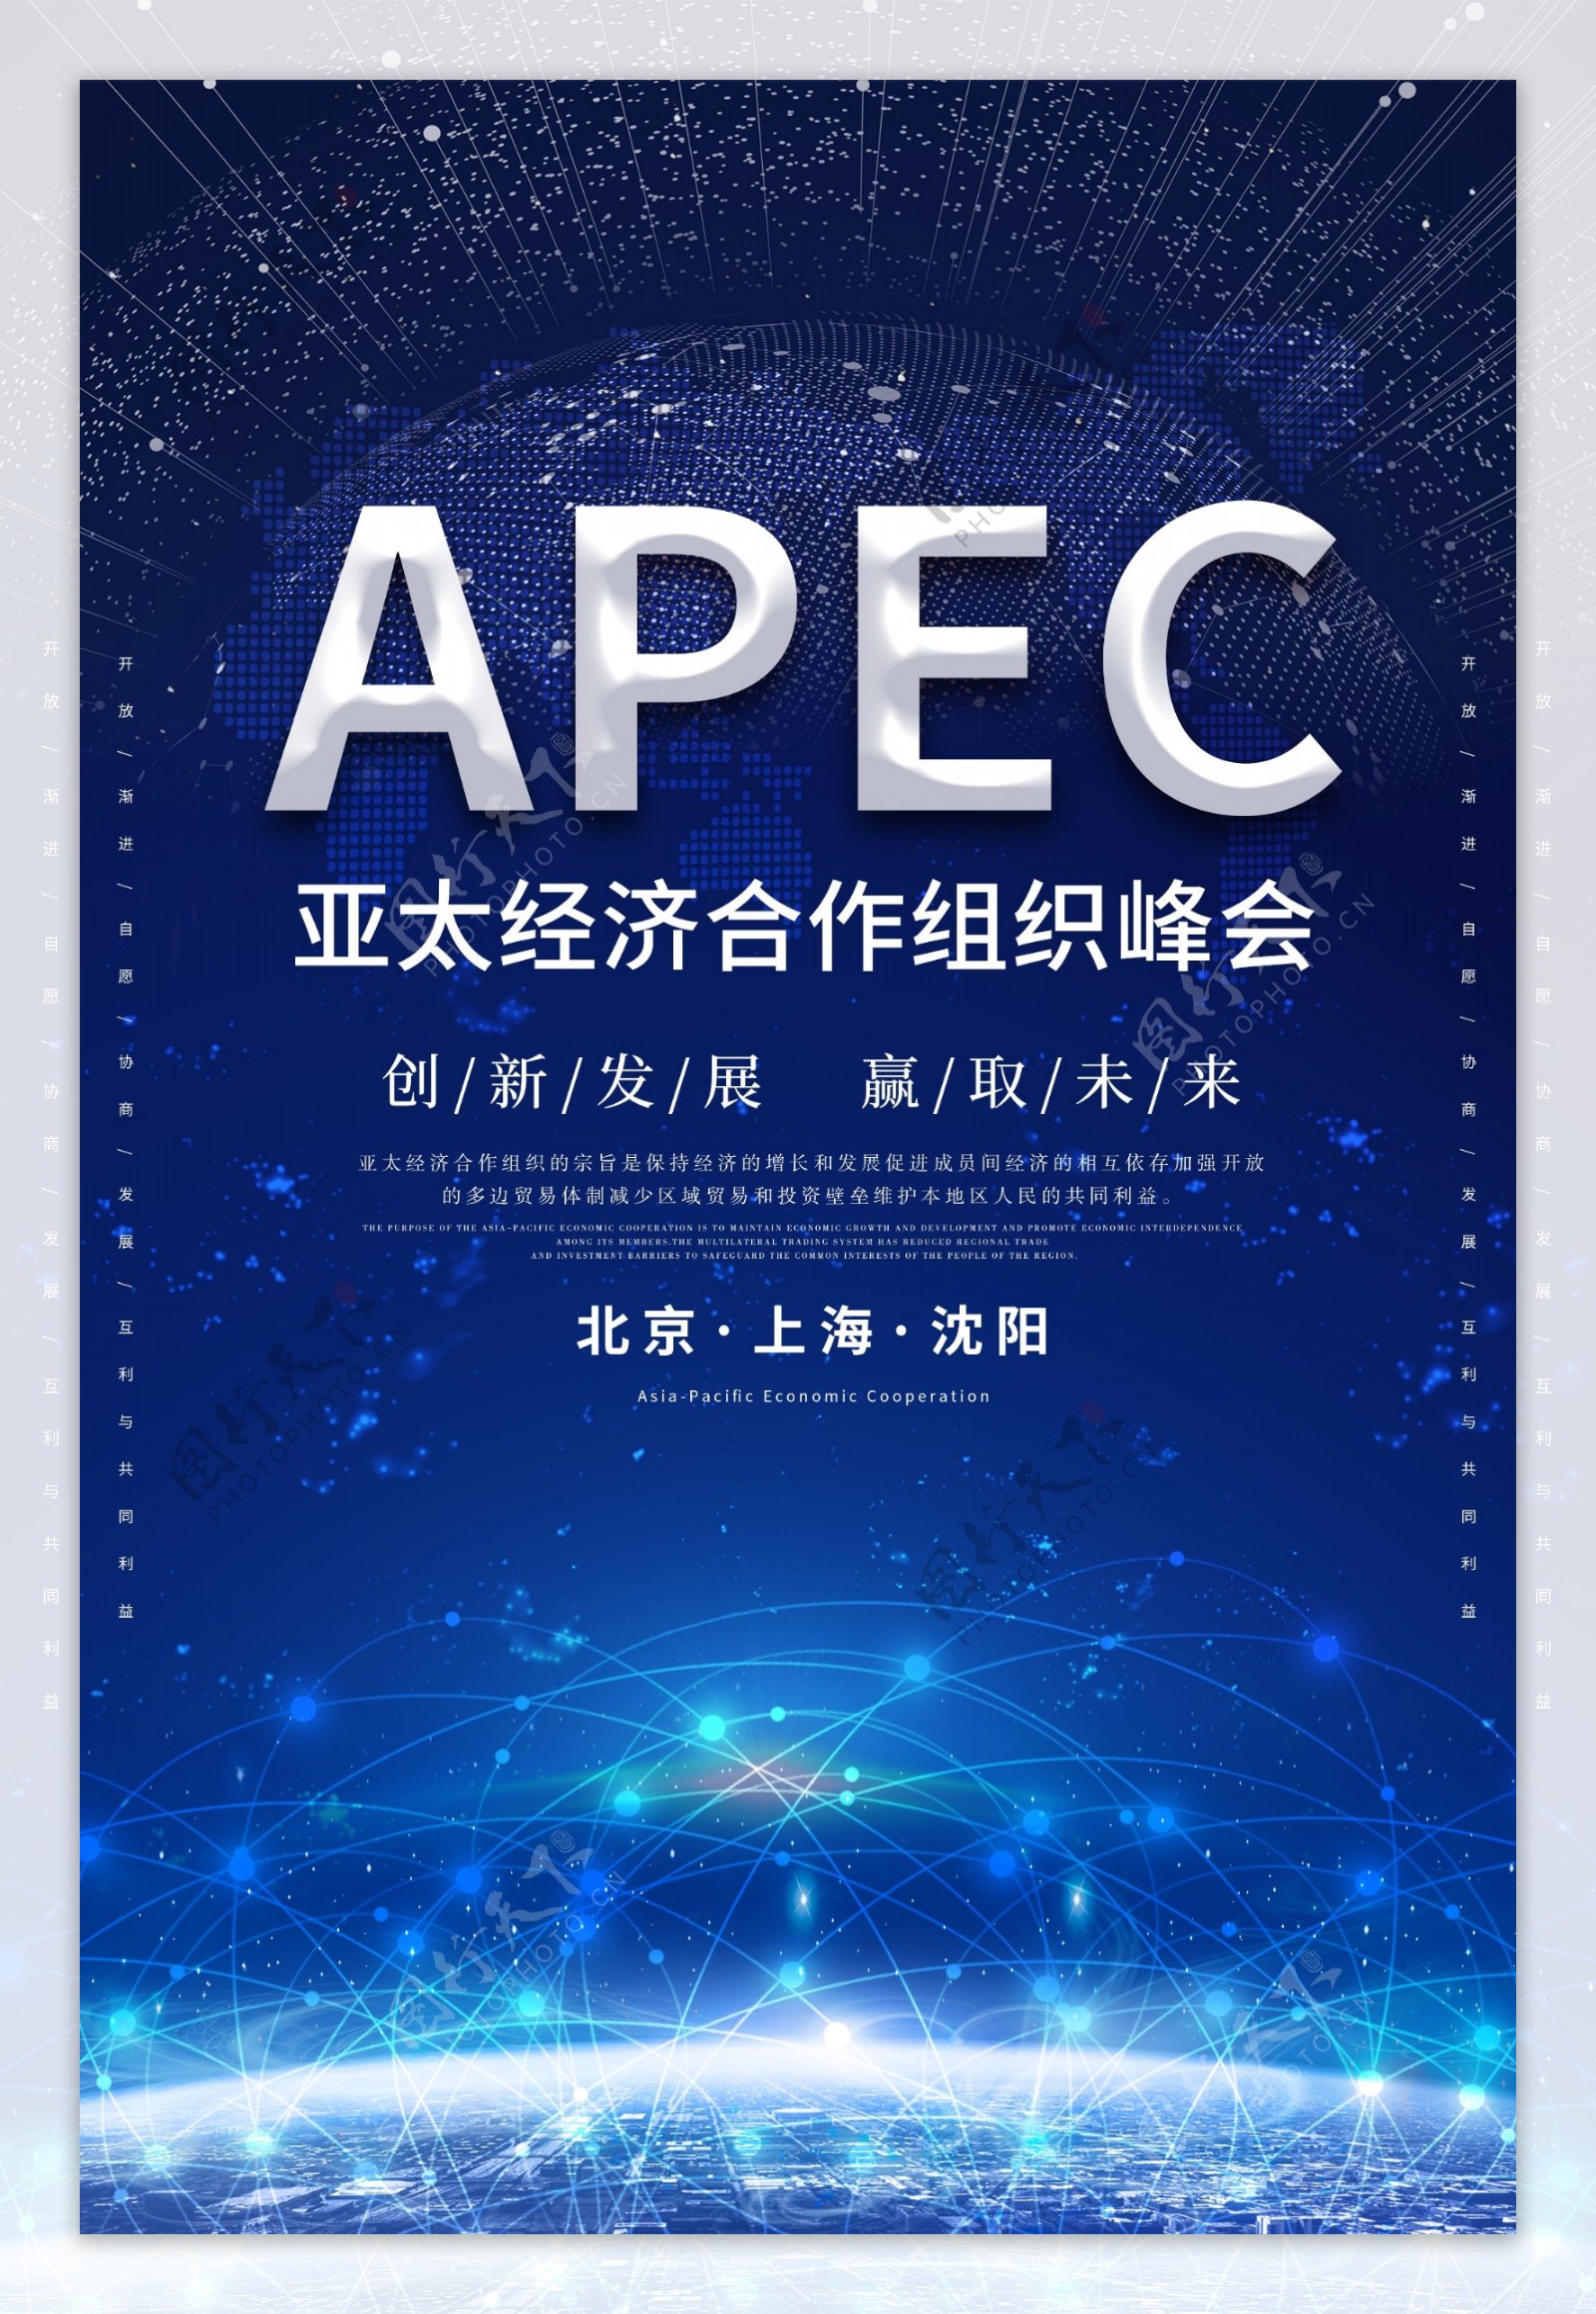 APEC亚太经济合作组峰会